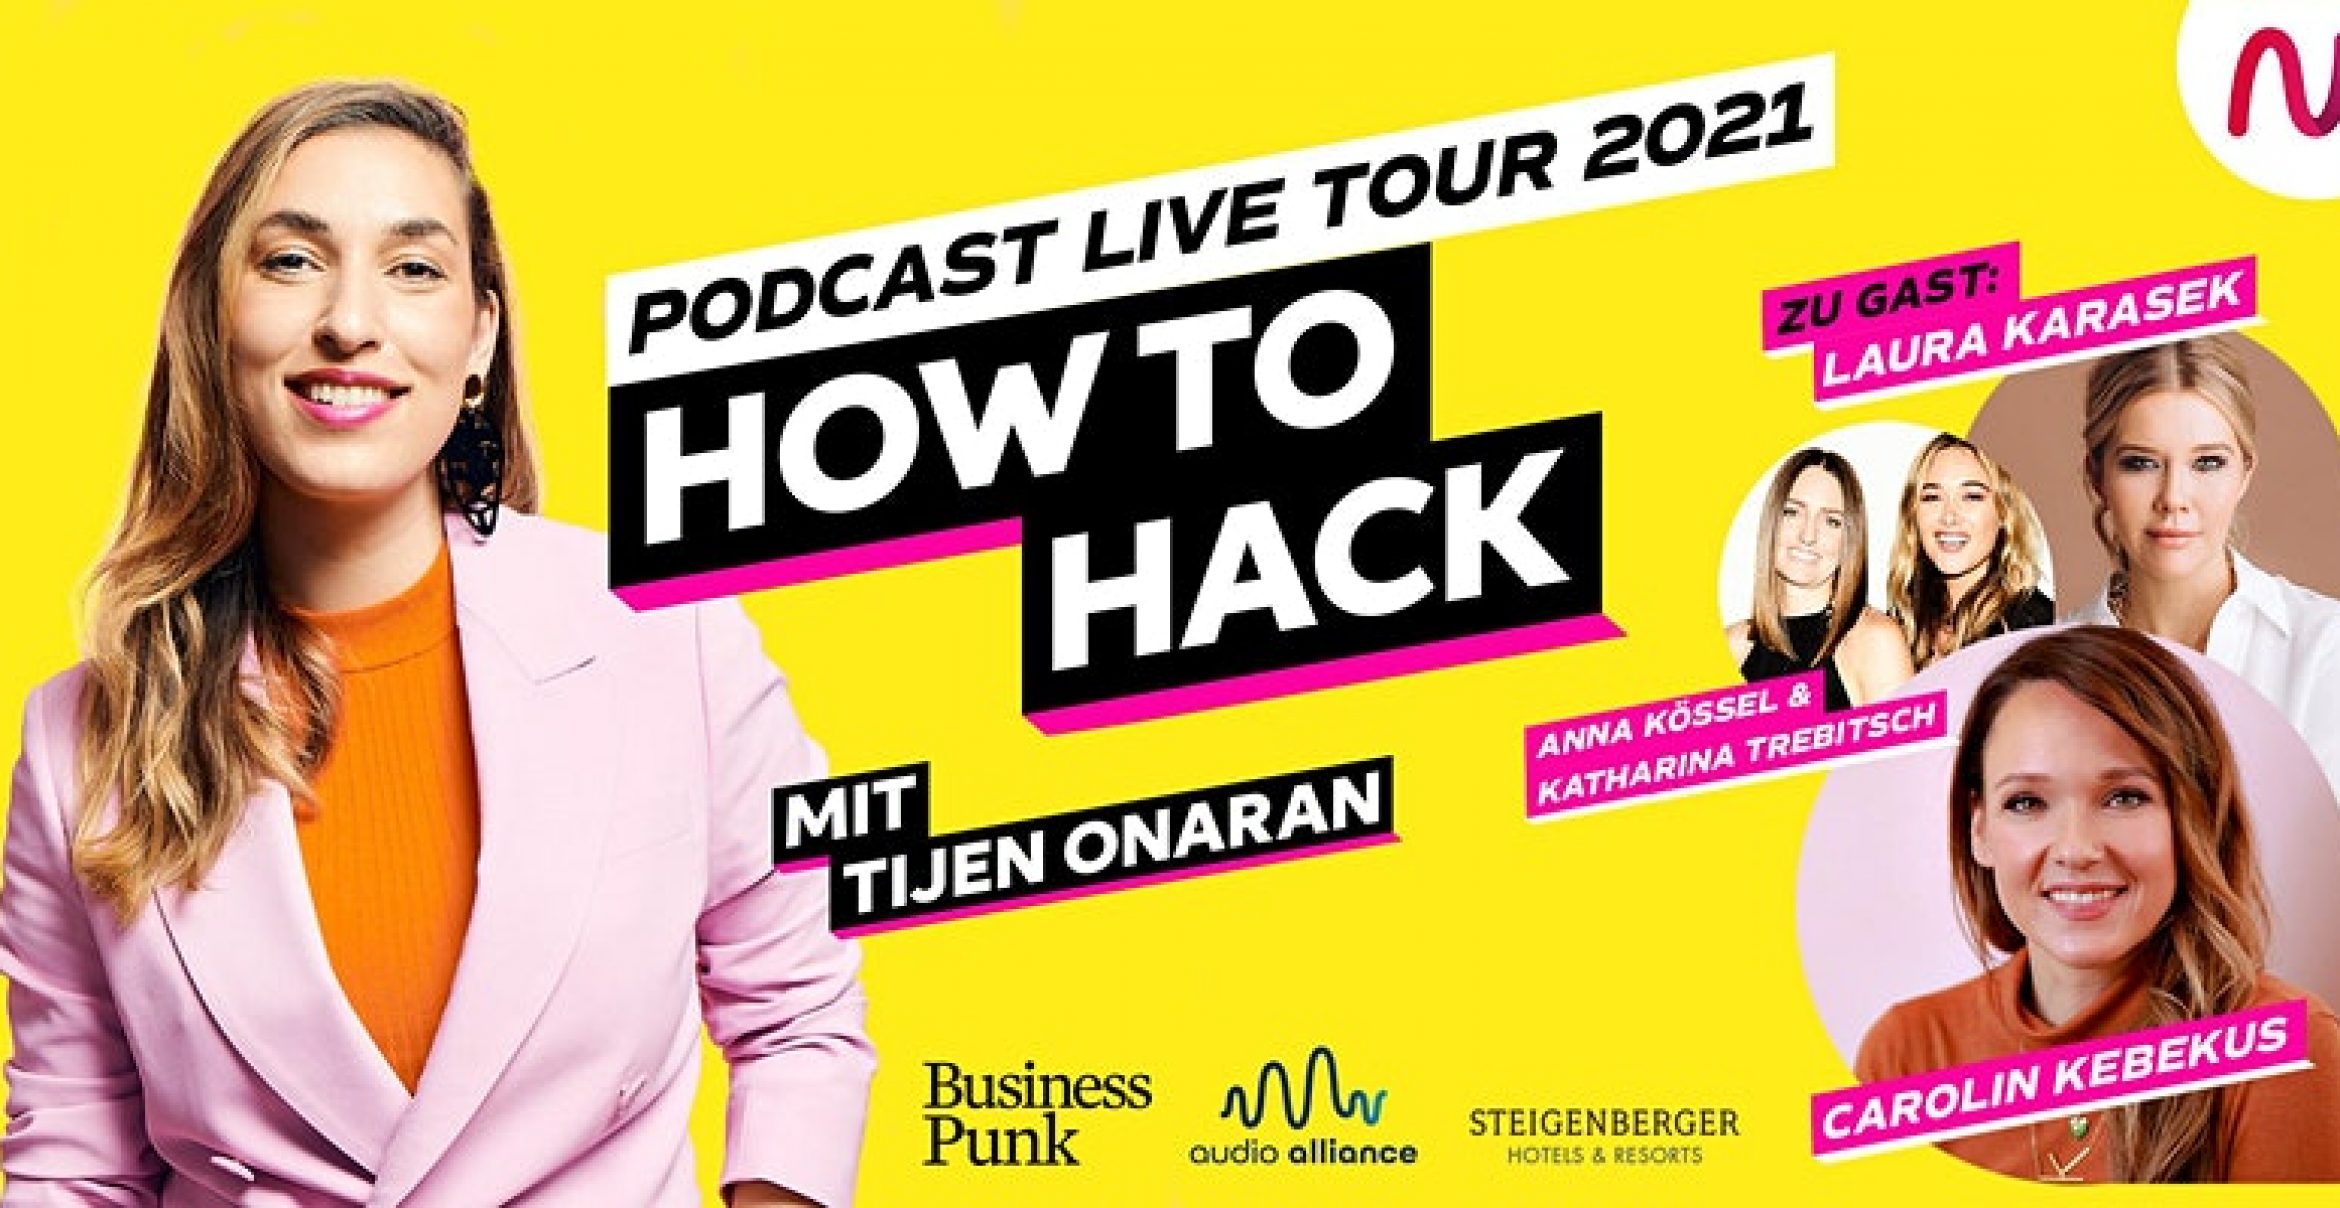 Live-Podcast HOW TO HACK mit Tijen Onaran, Carolin Kebekus, Laura Karasek, Anna Kössel und Katharina Trebitsch